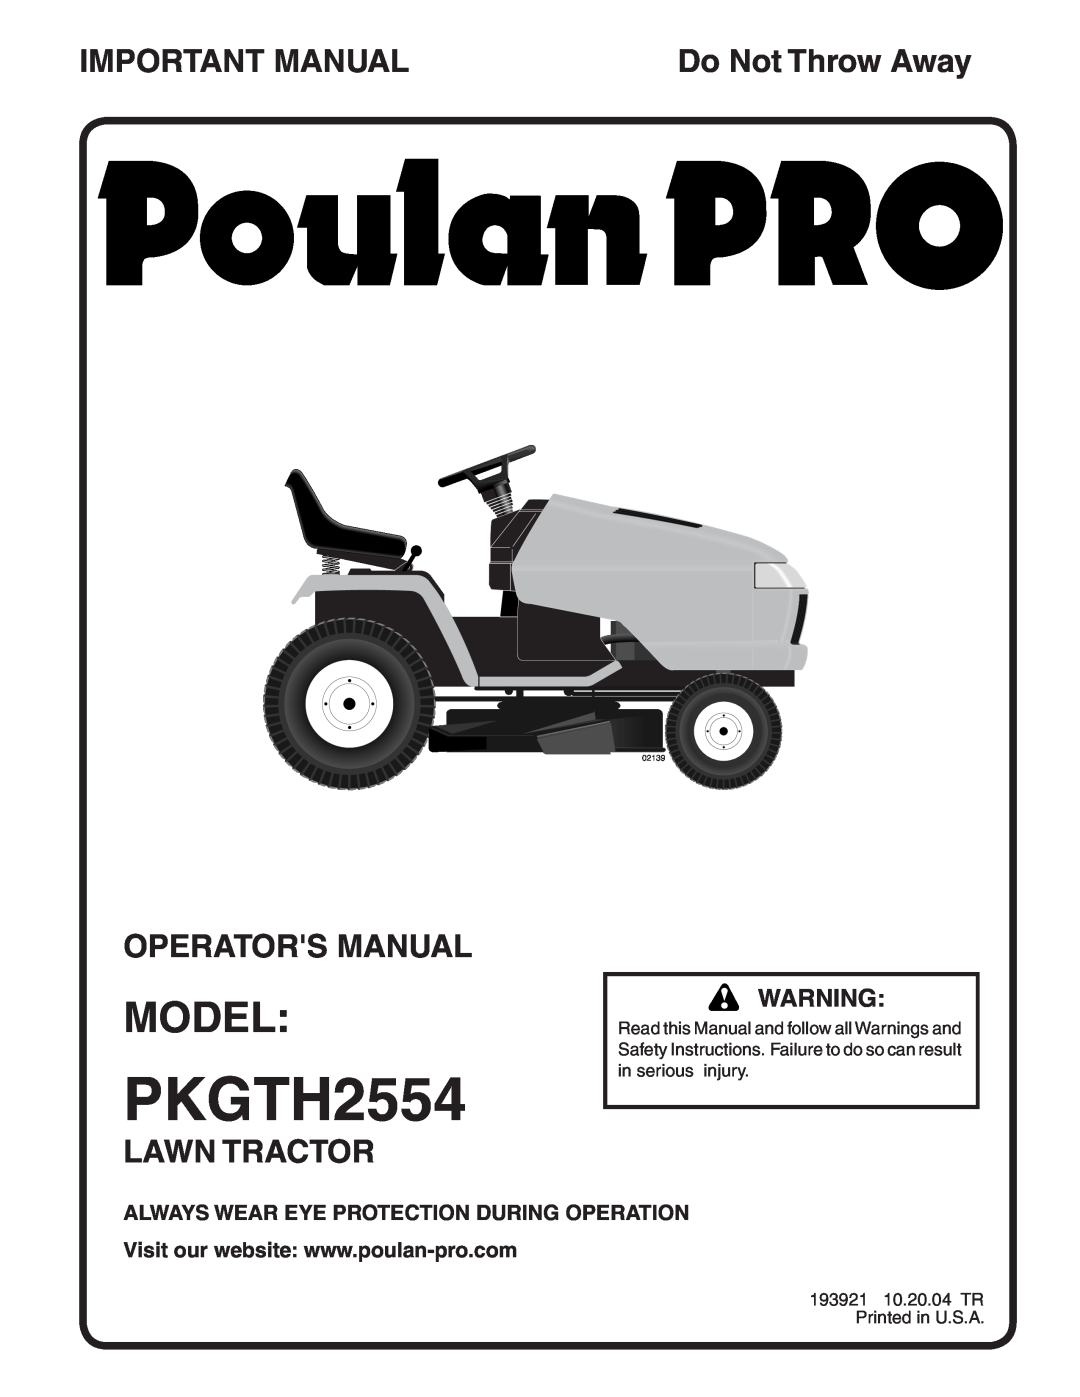 Poulan PKGTH2554 manual Model, Important Manual, Operators Manual, Lawn Tractor, Do Not Throw Away, 02139 